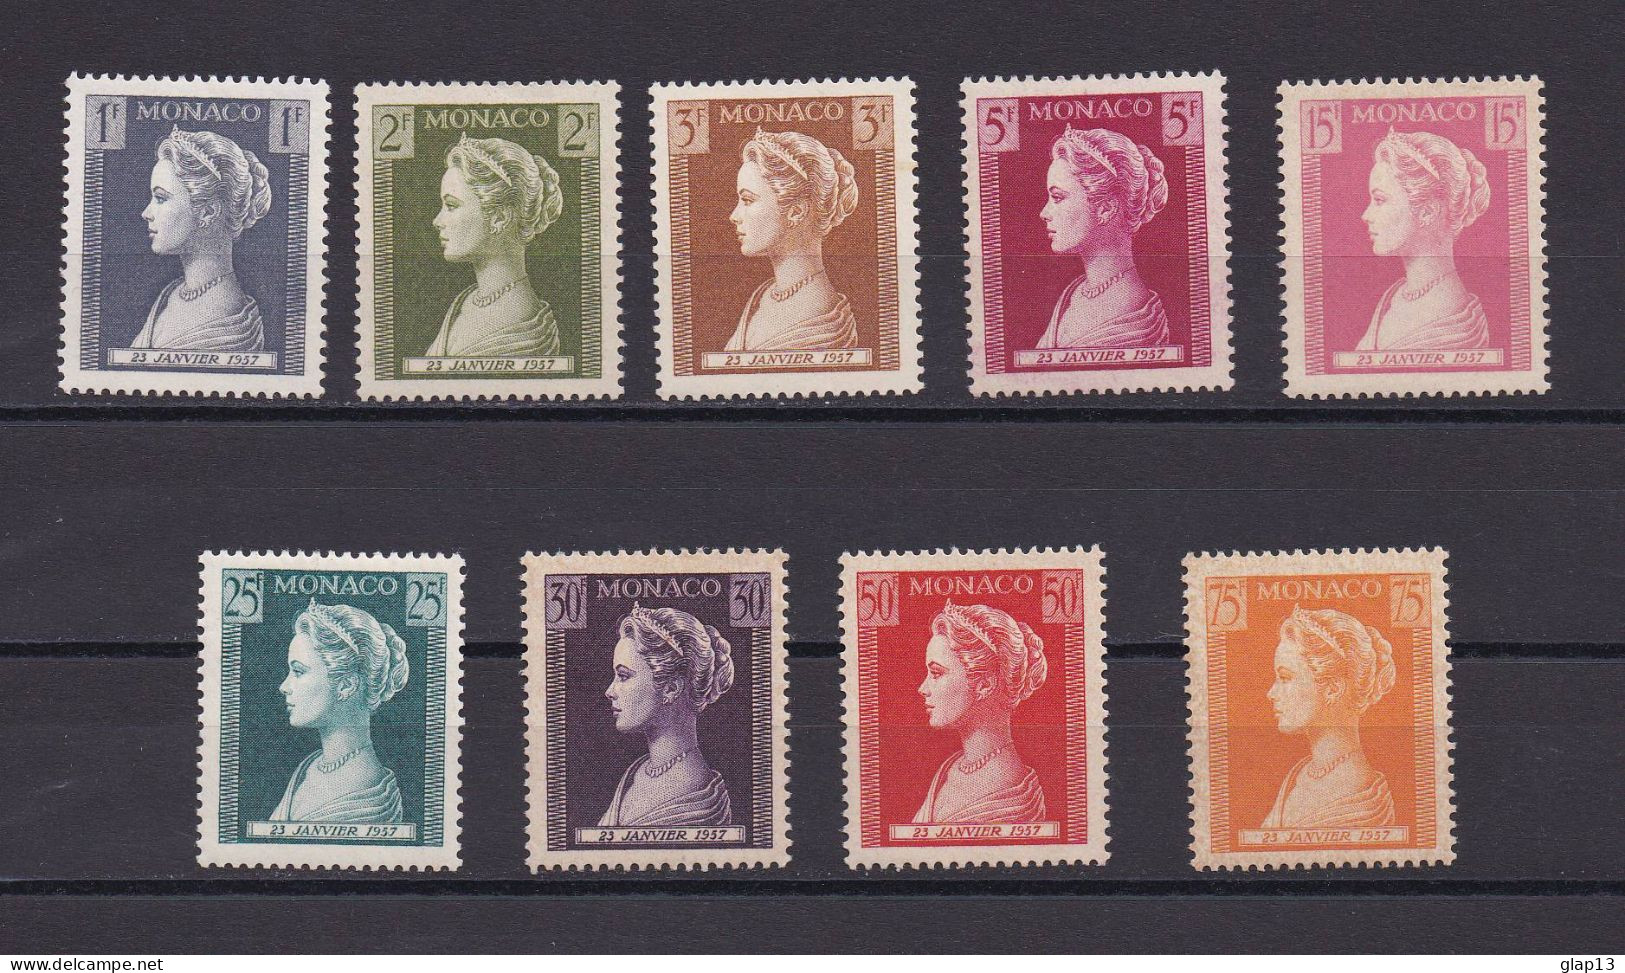 MONACO 1957 TIMBRE N°478/86 NEUF** PRINCESSE CAROLINE - Unused Stamps